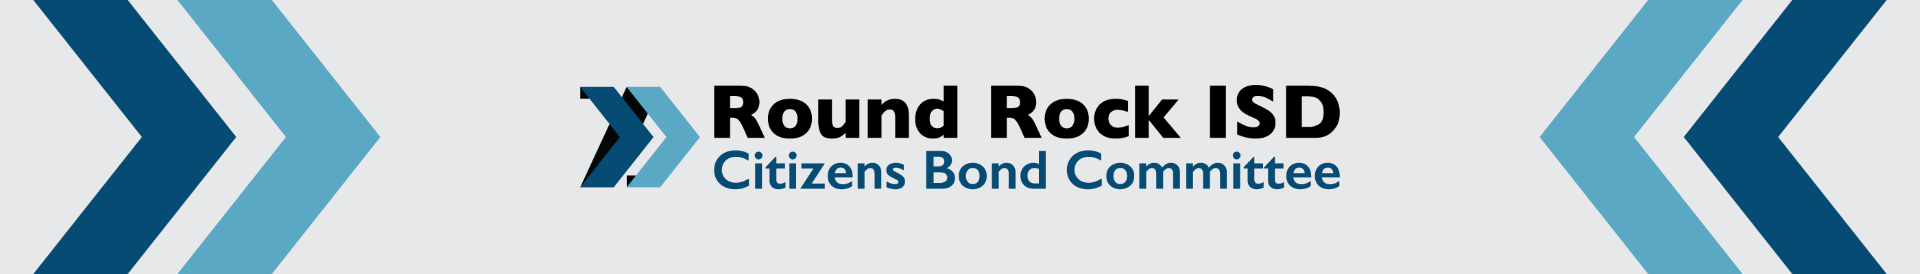 Round Rock ISD Citizens Bond Committee